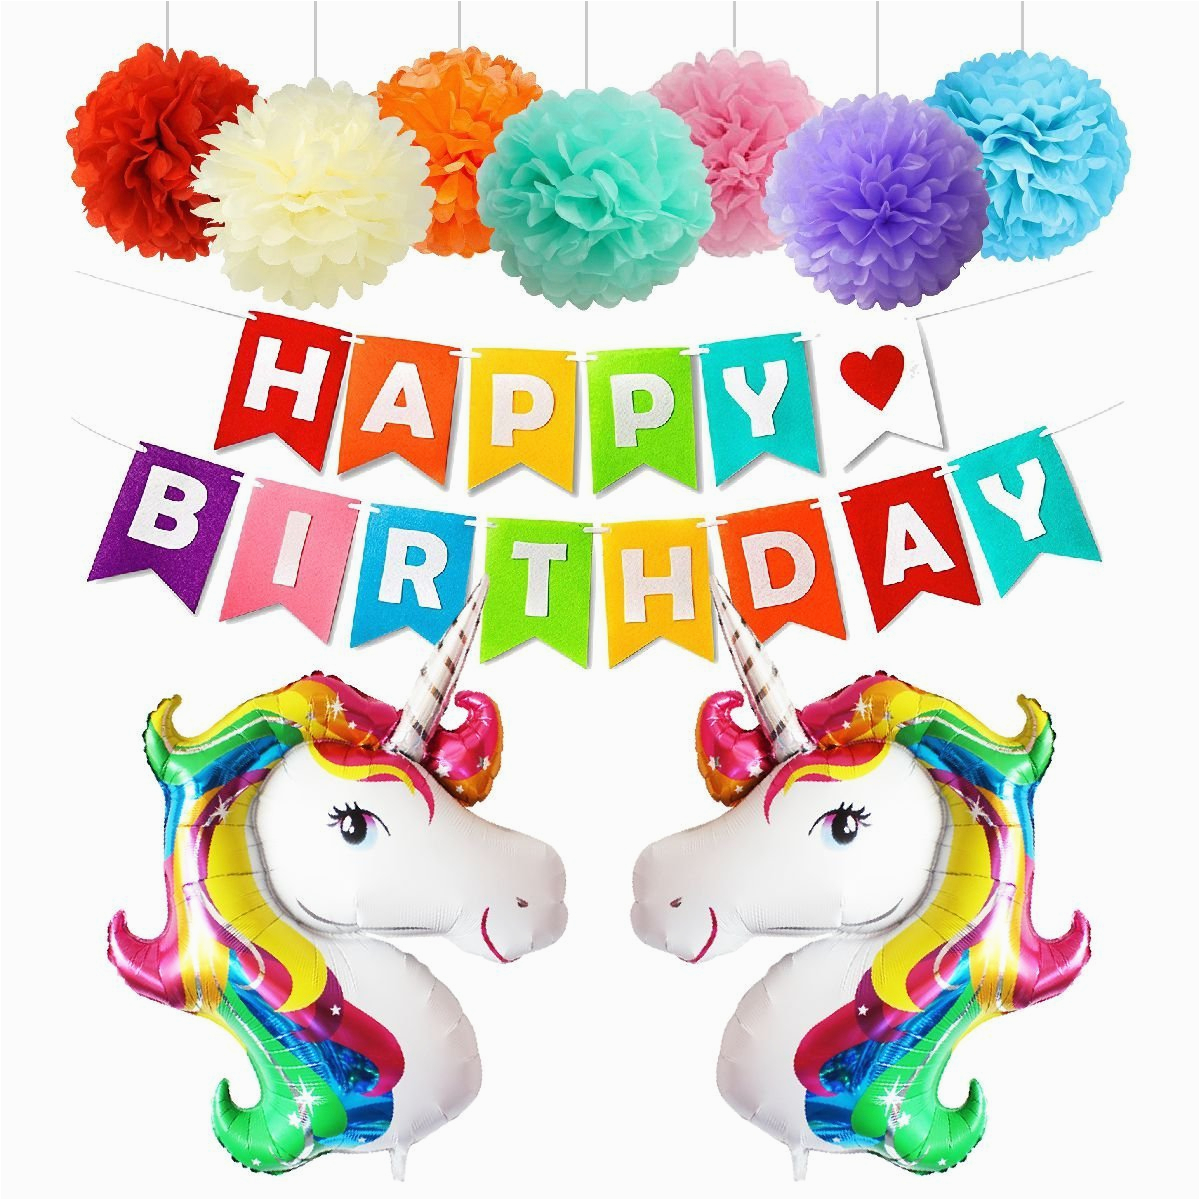 Happy Birthday Banner Walmart Canada Happy Birthday Party Decorations Supplies with Unicorn